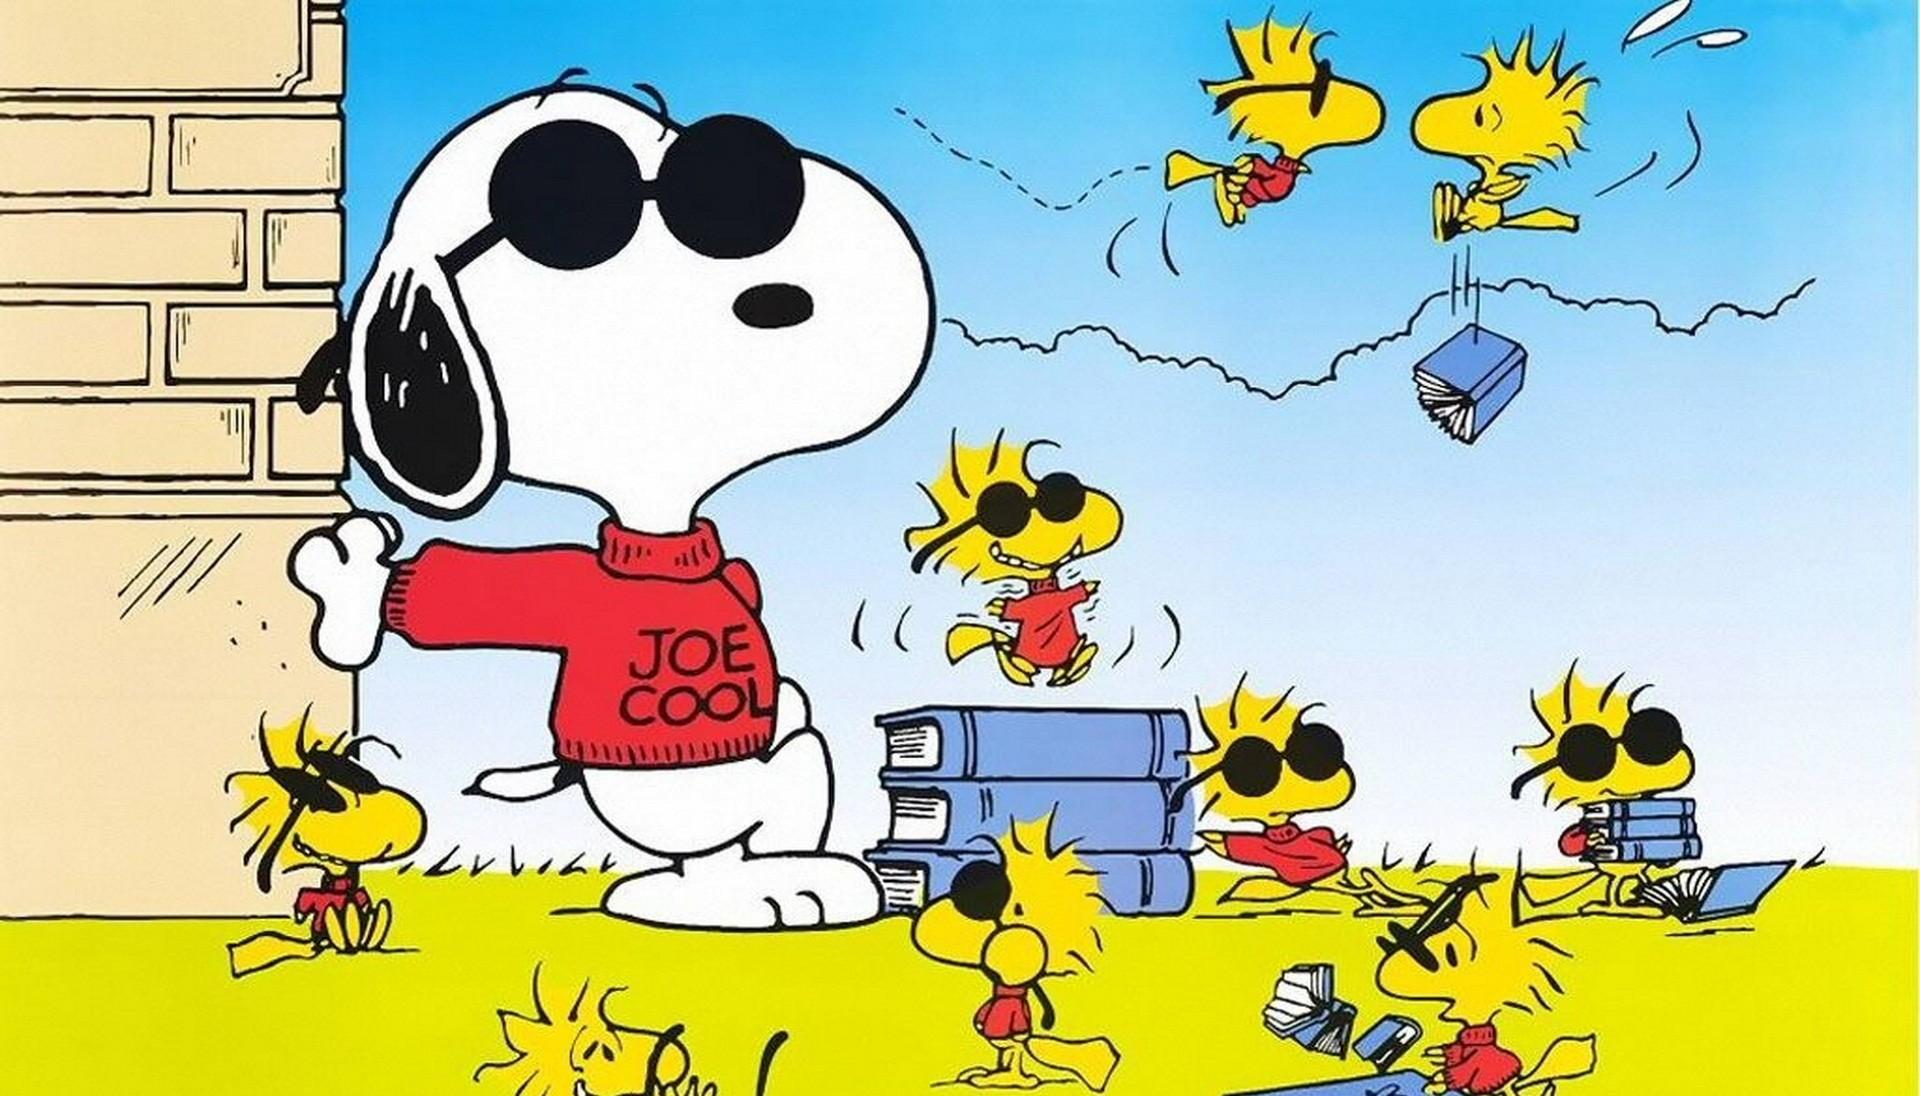 Snoopy Valentine Wallpaper